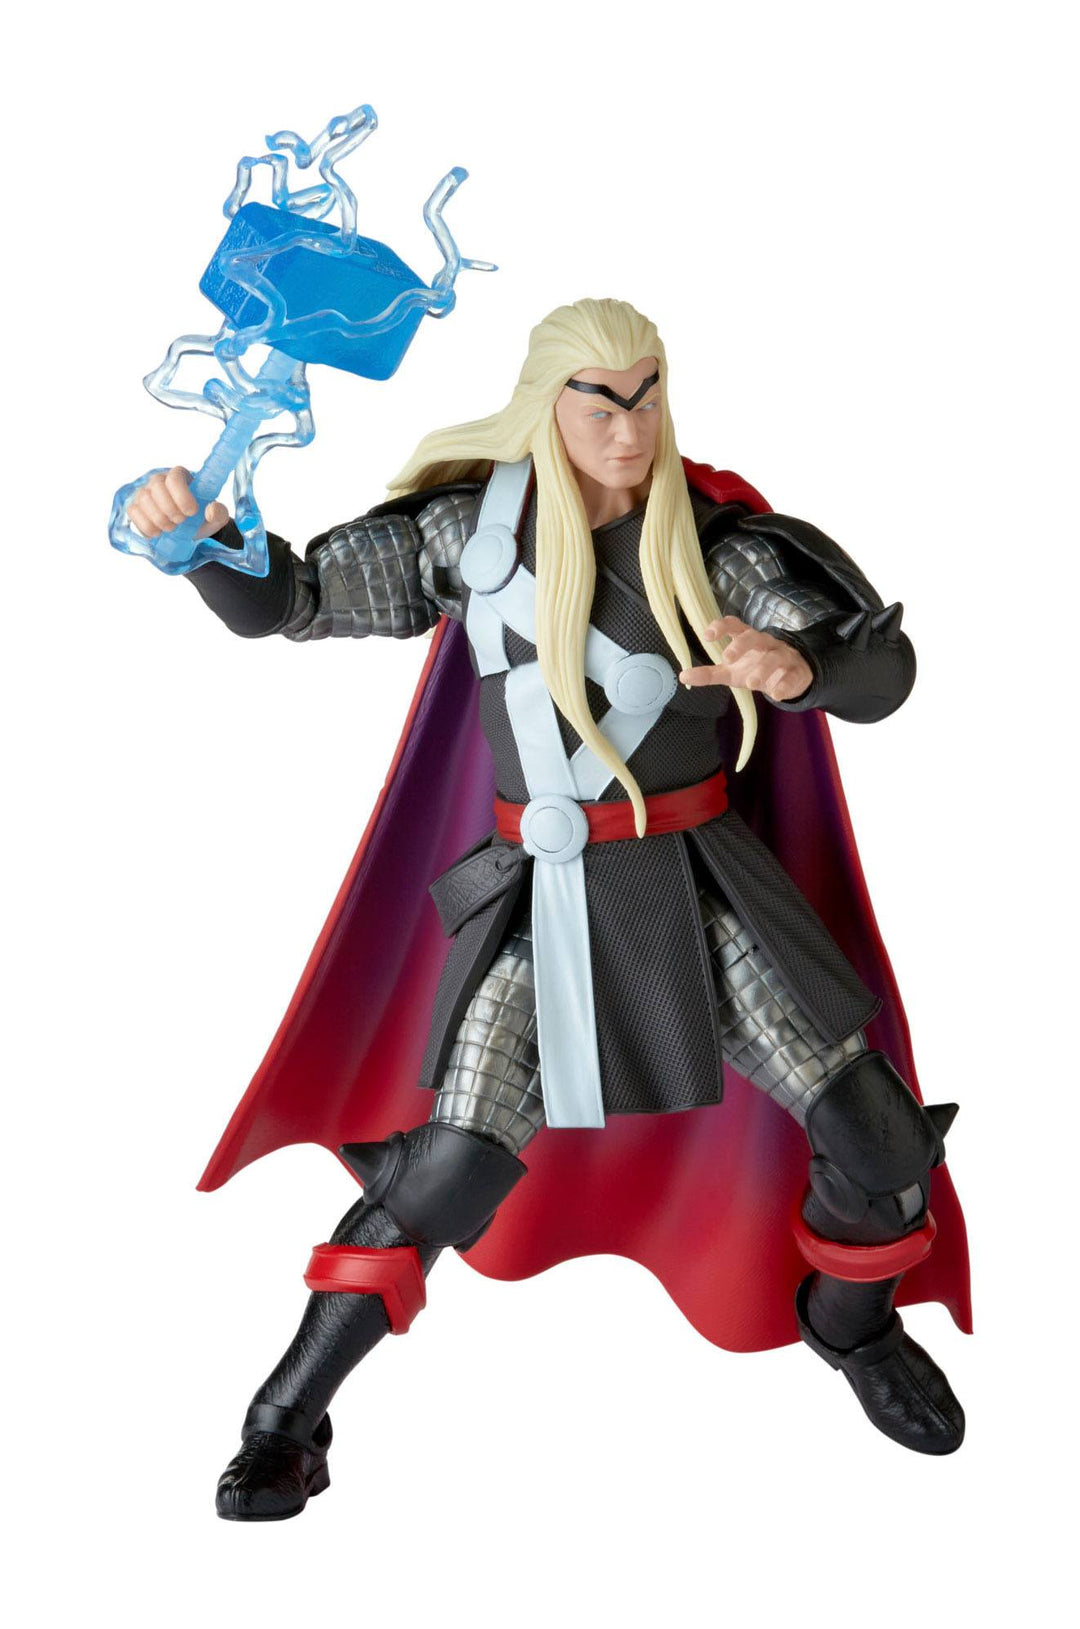 Marvel Legends Thor Herald of Galactus (Controller BAF)